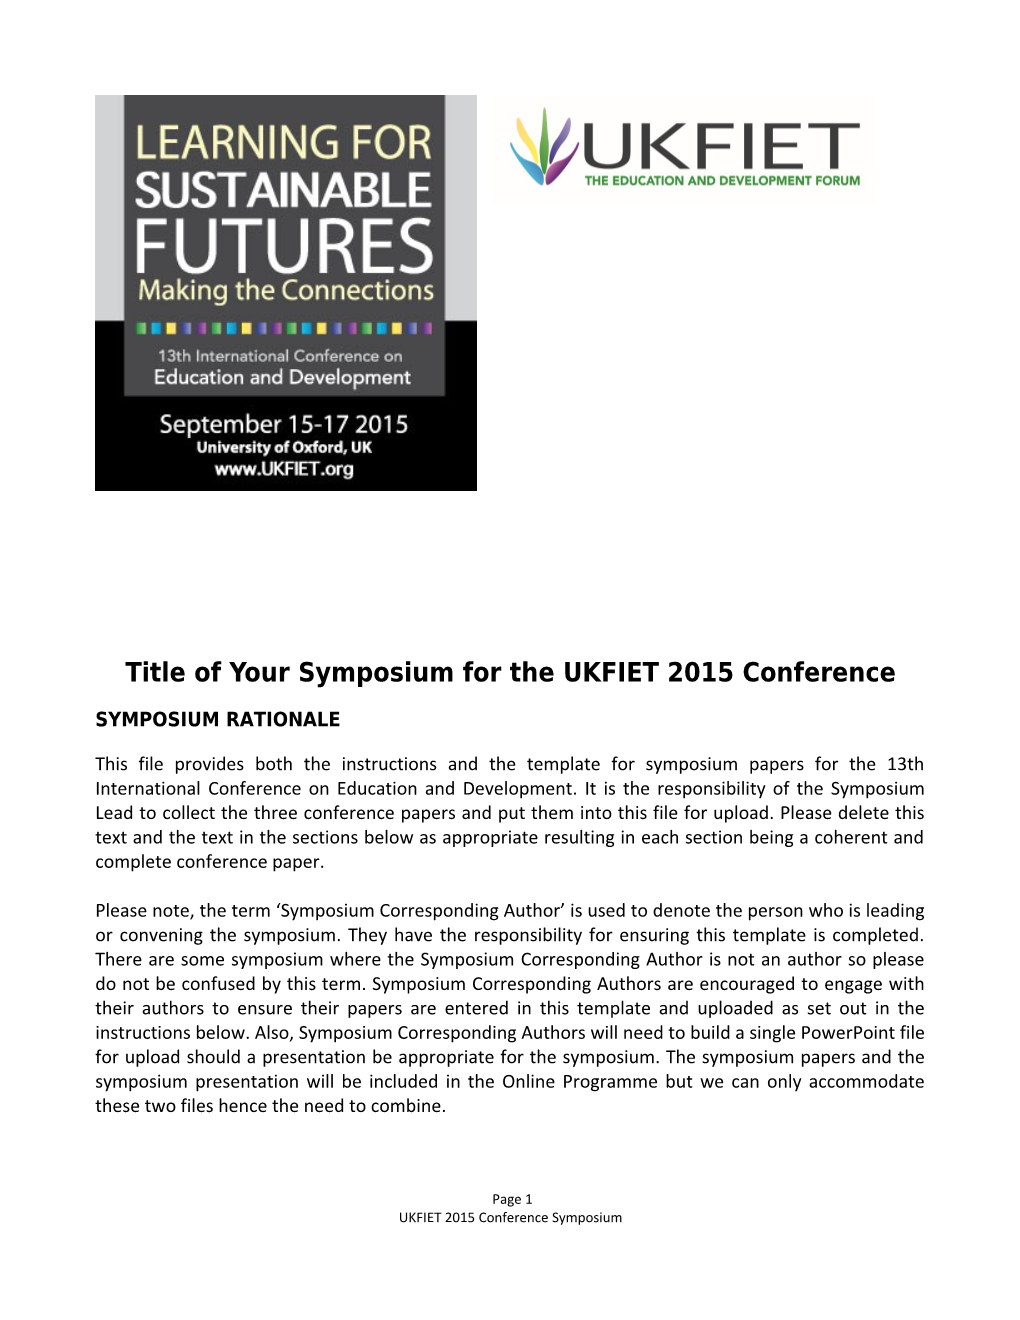 UKFIET Conference Symposium Template